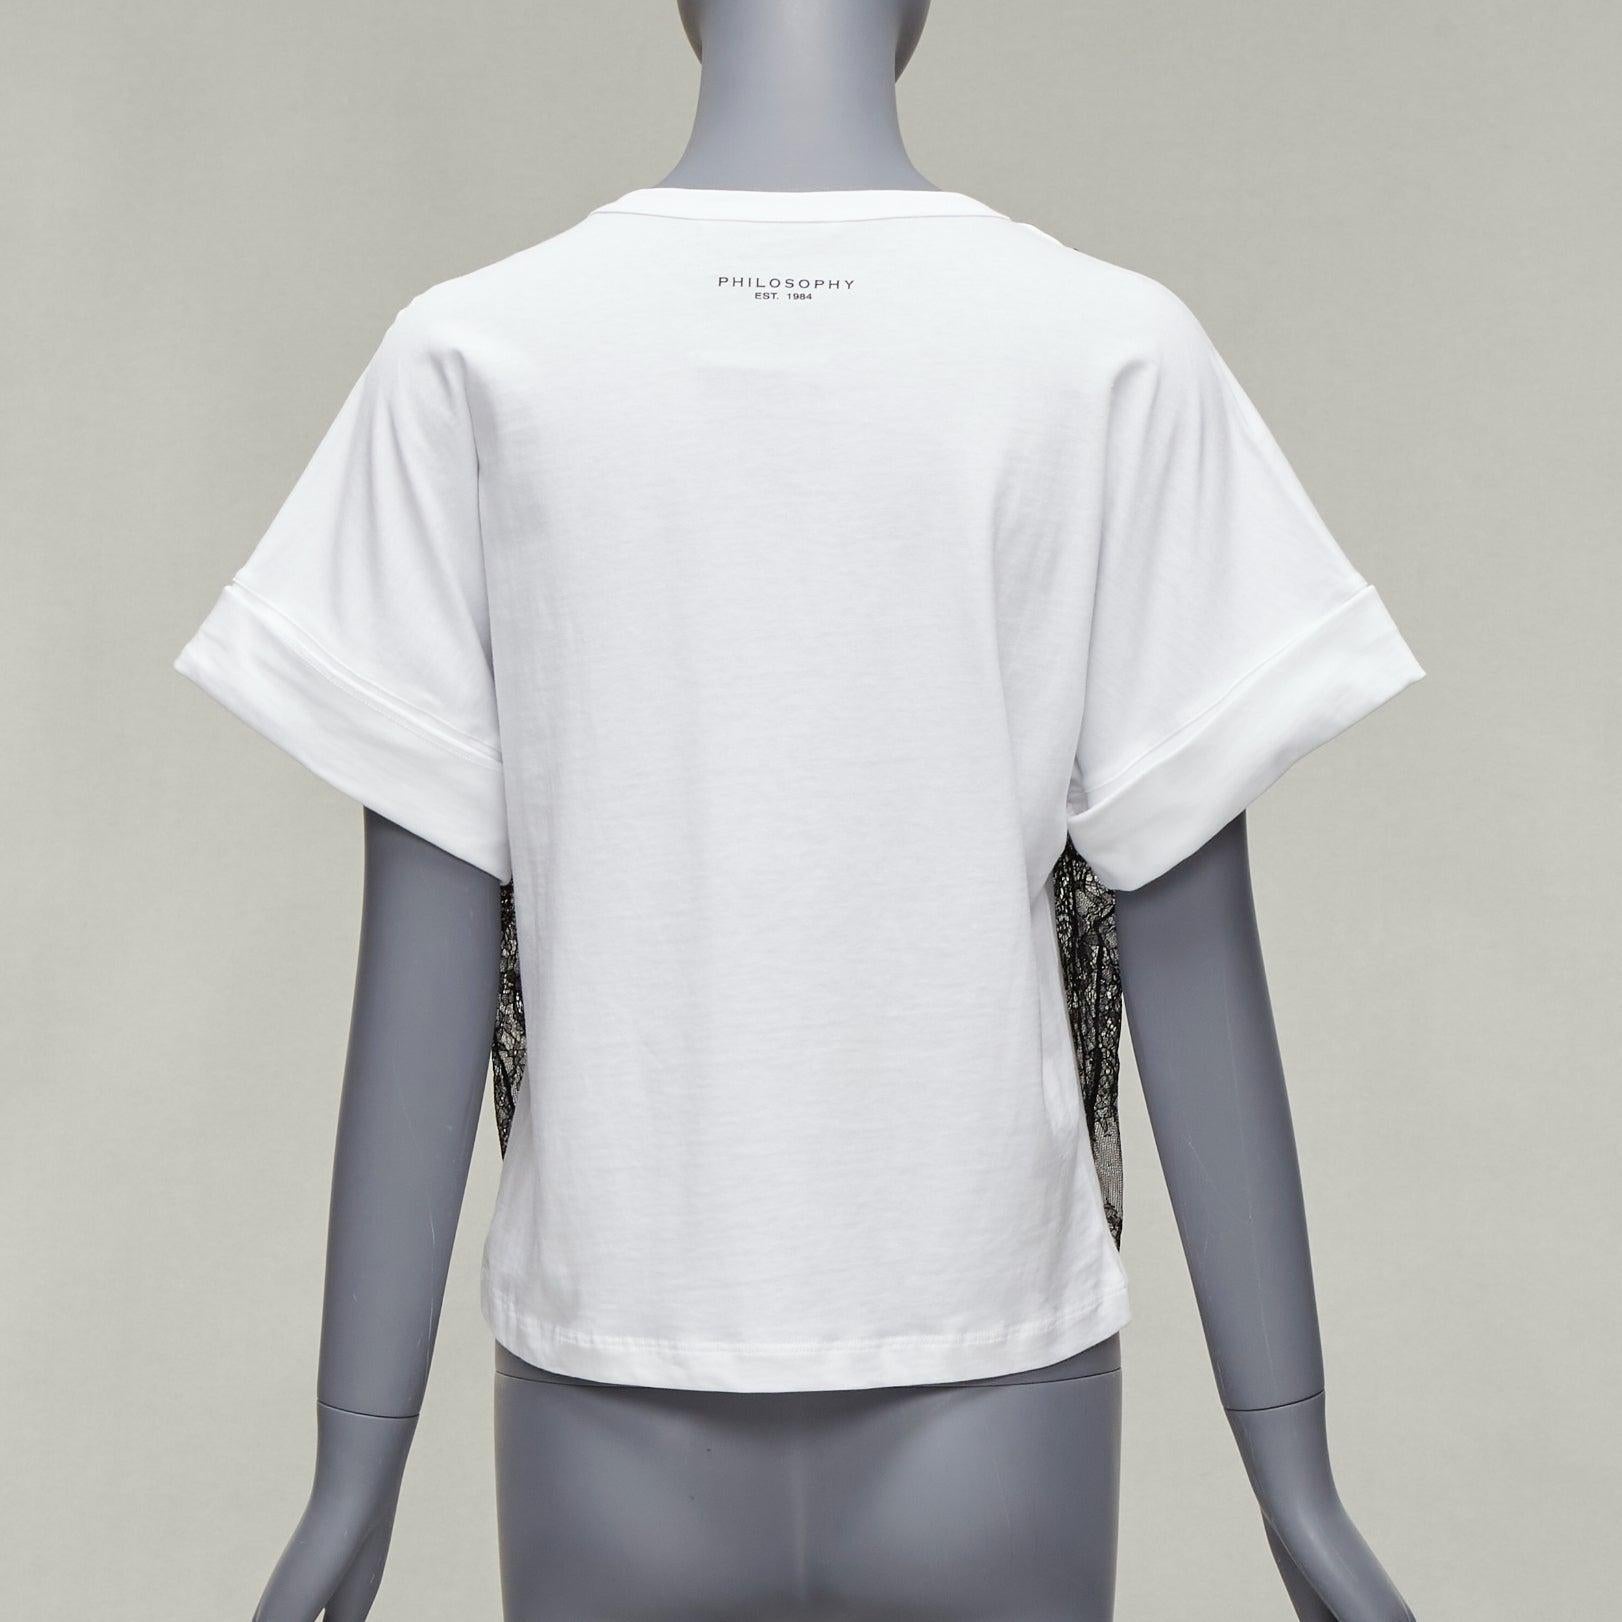 PHILOSOPHY Lorenzo Serafini tromp loiel draped silk camisole white tshirt XS For Sale 1